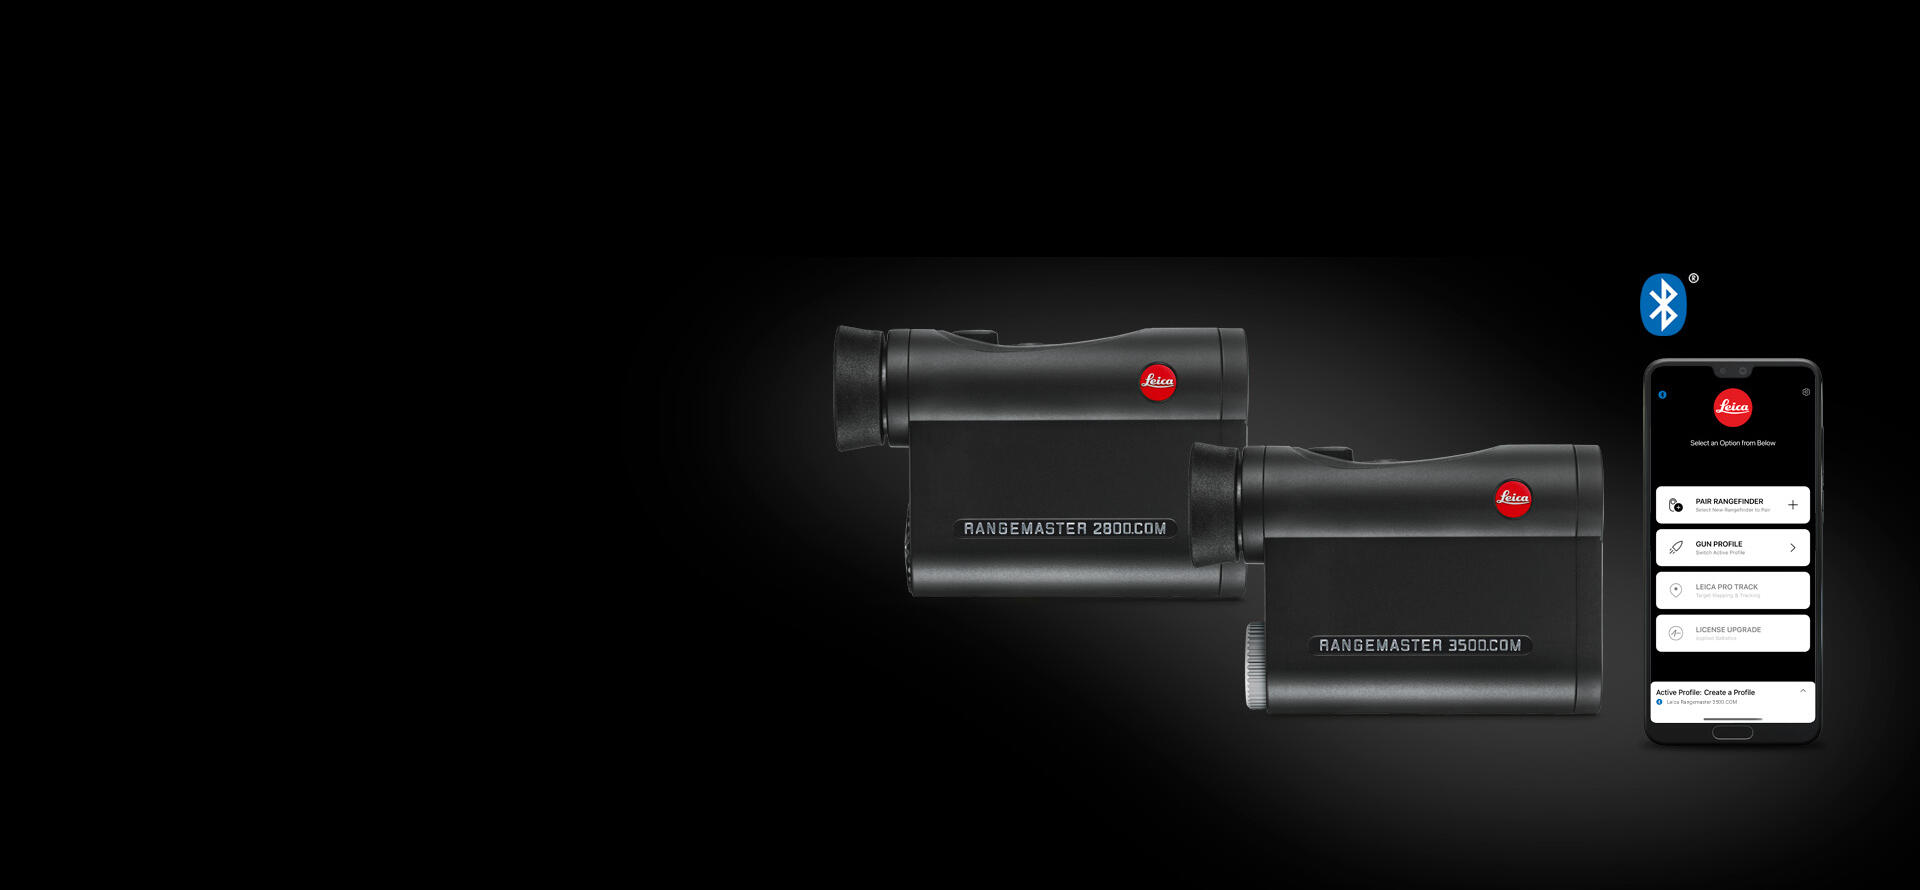 Hunting_Leica-Compact-Rangefinders_Rangemaster_COM_2 Models_front_BallisticsApp_Bluetooth